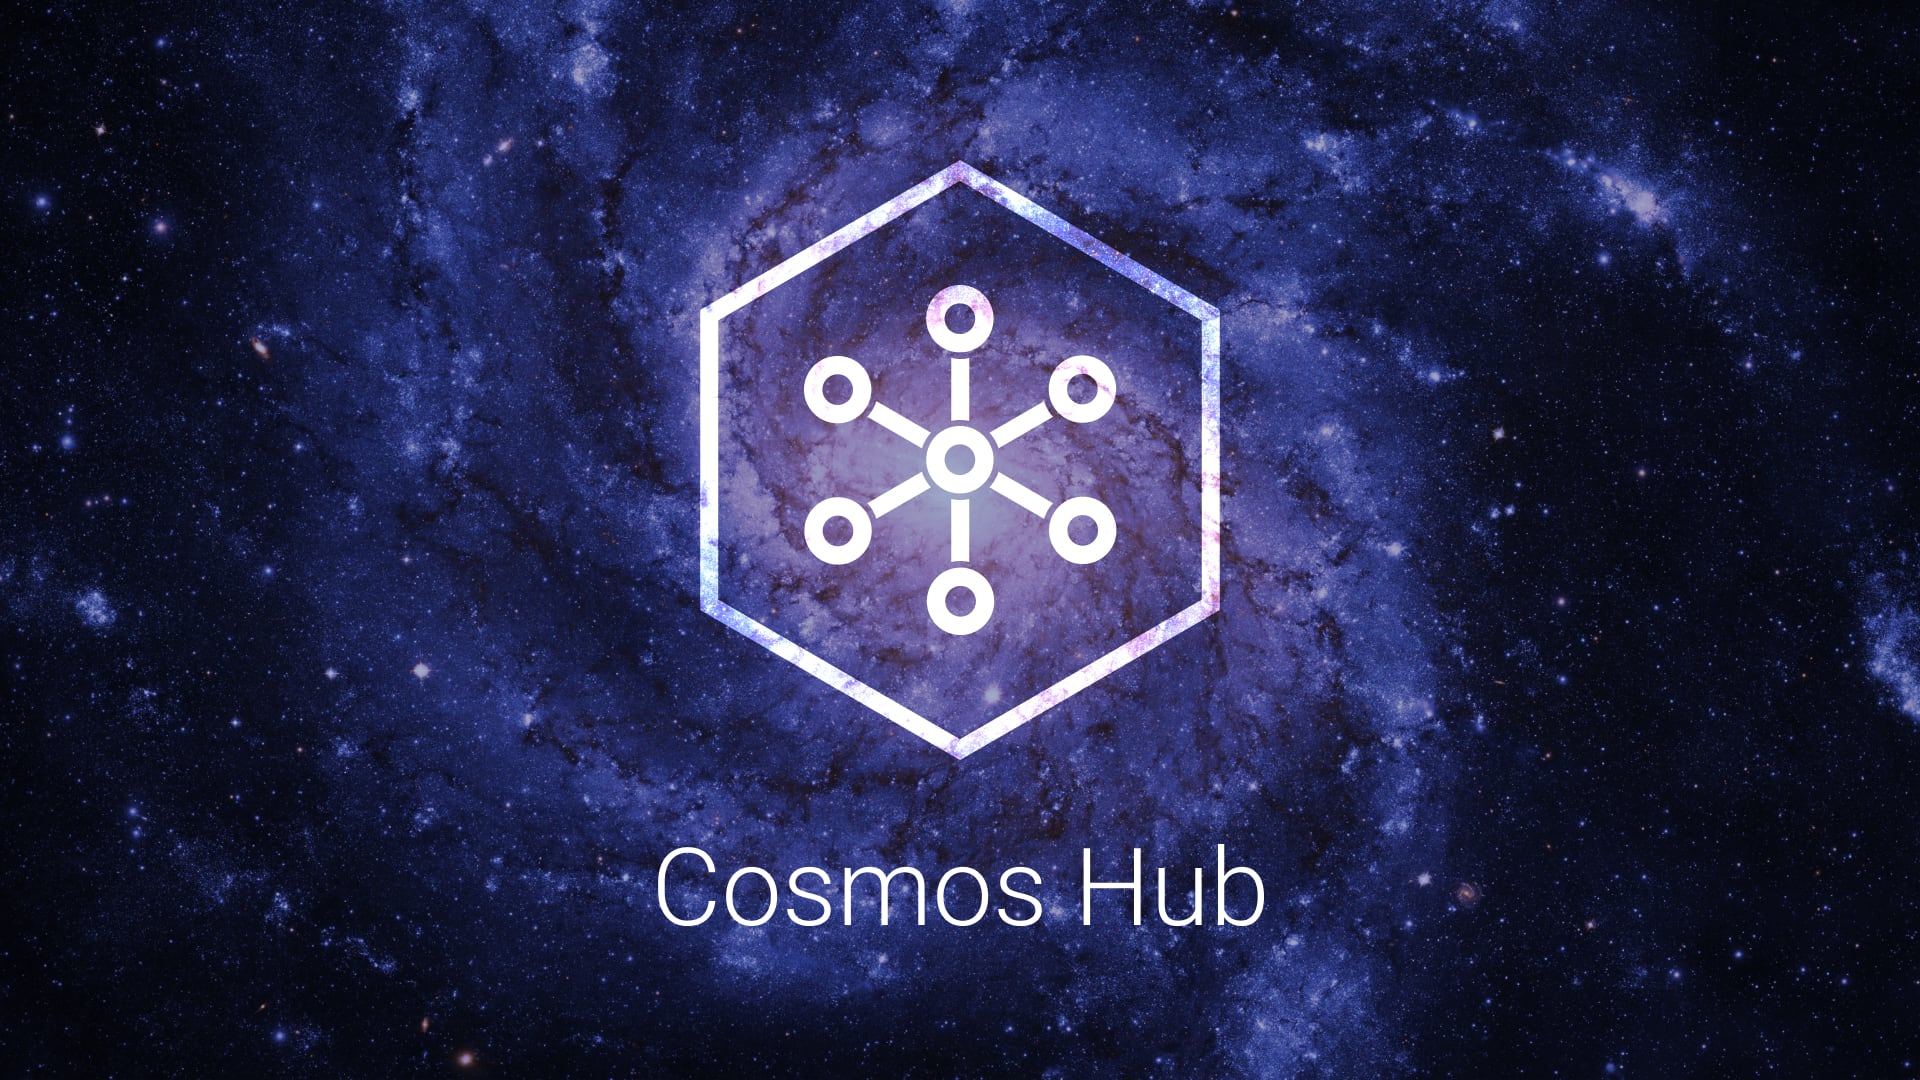 Cosmos Network cosmos hub logo on dark background for decentral publishing